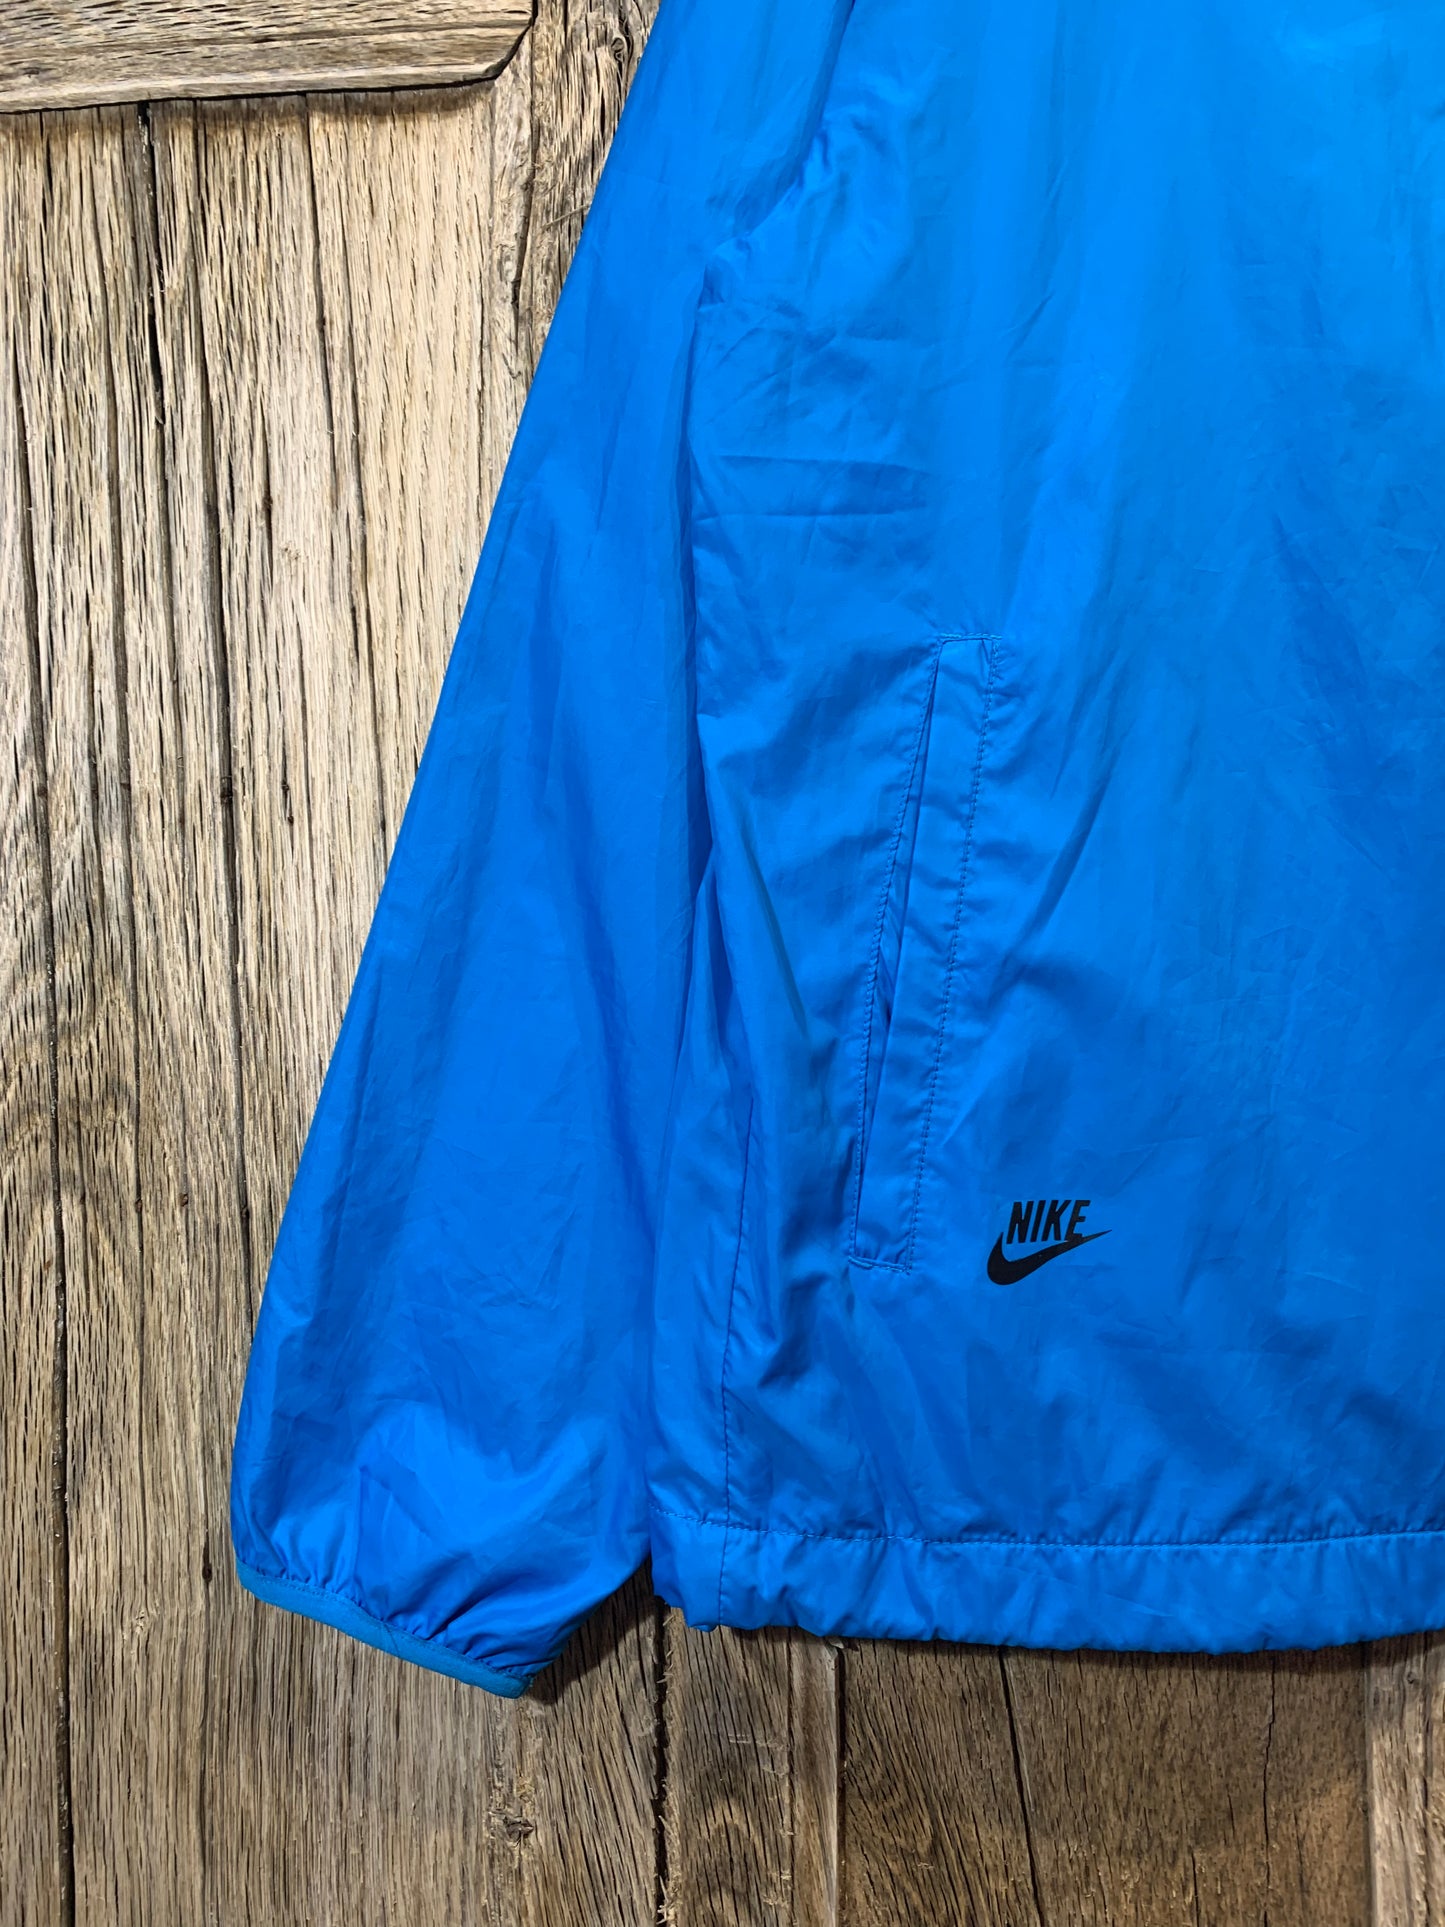 Vintage Blue Nike AW10 Coach Jacket